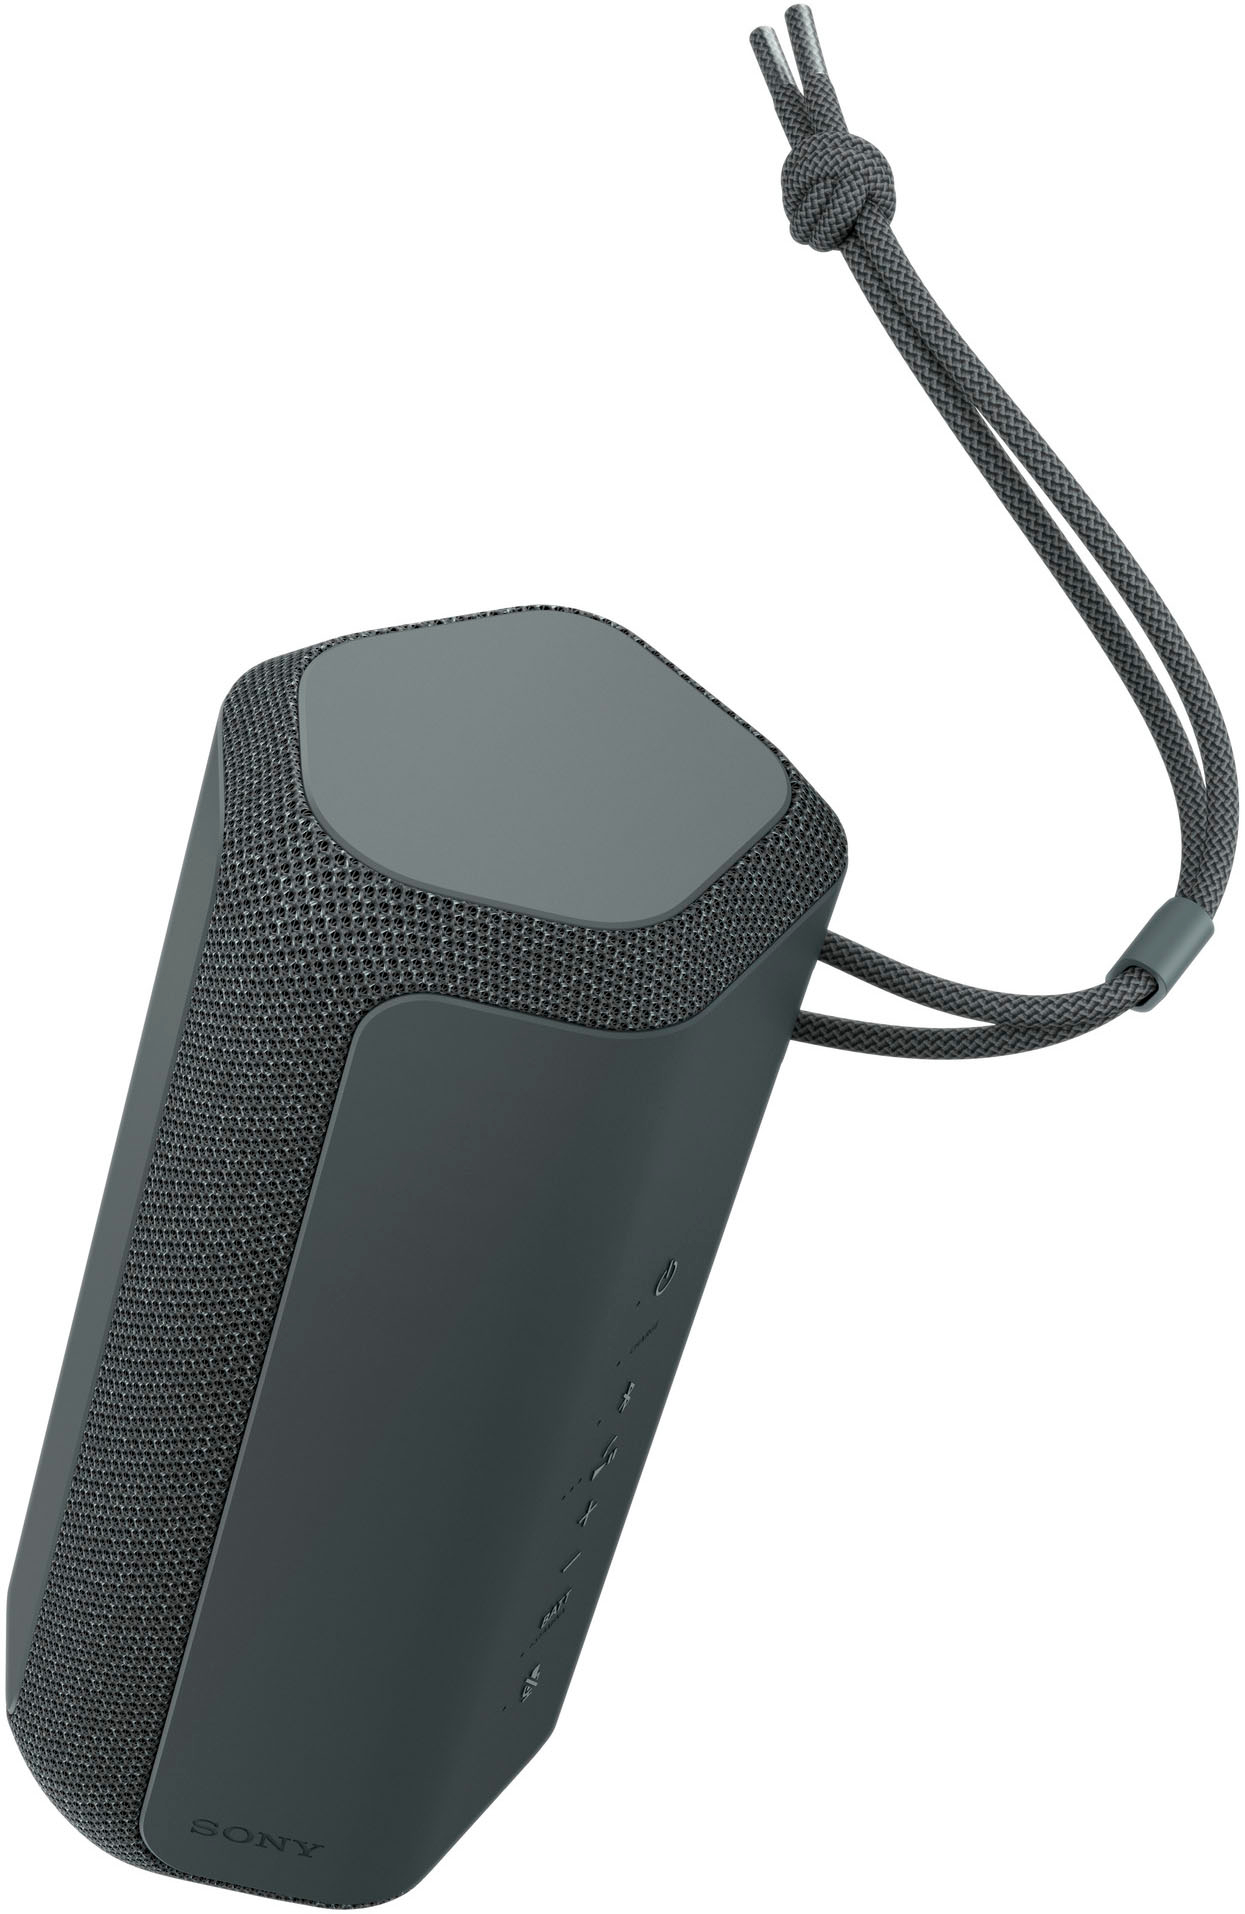 Sony XE200 Portable Waterproof and Dustproof Bluetooth Speaker Black  SRSXE200/B - Best Buy